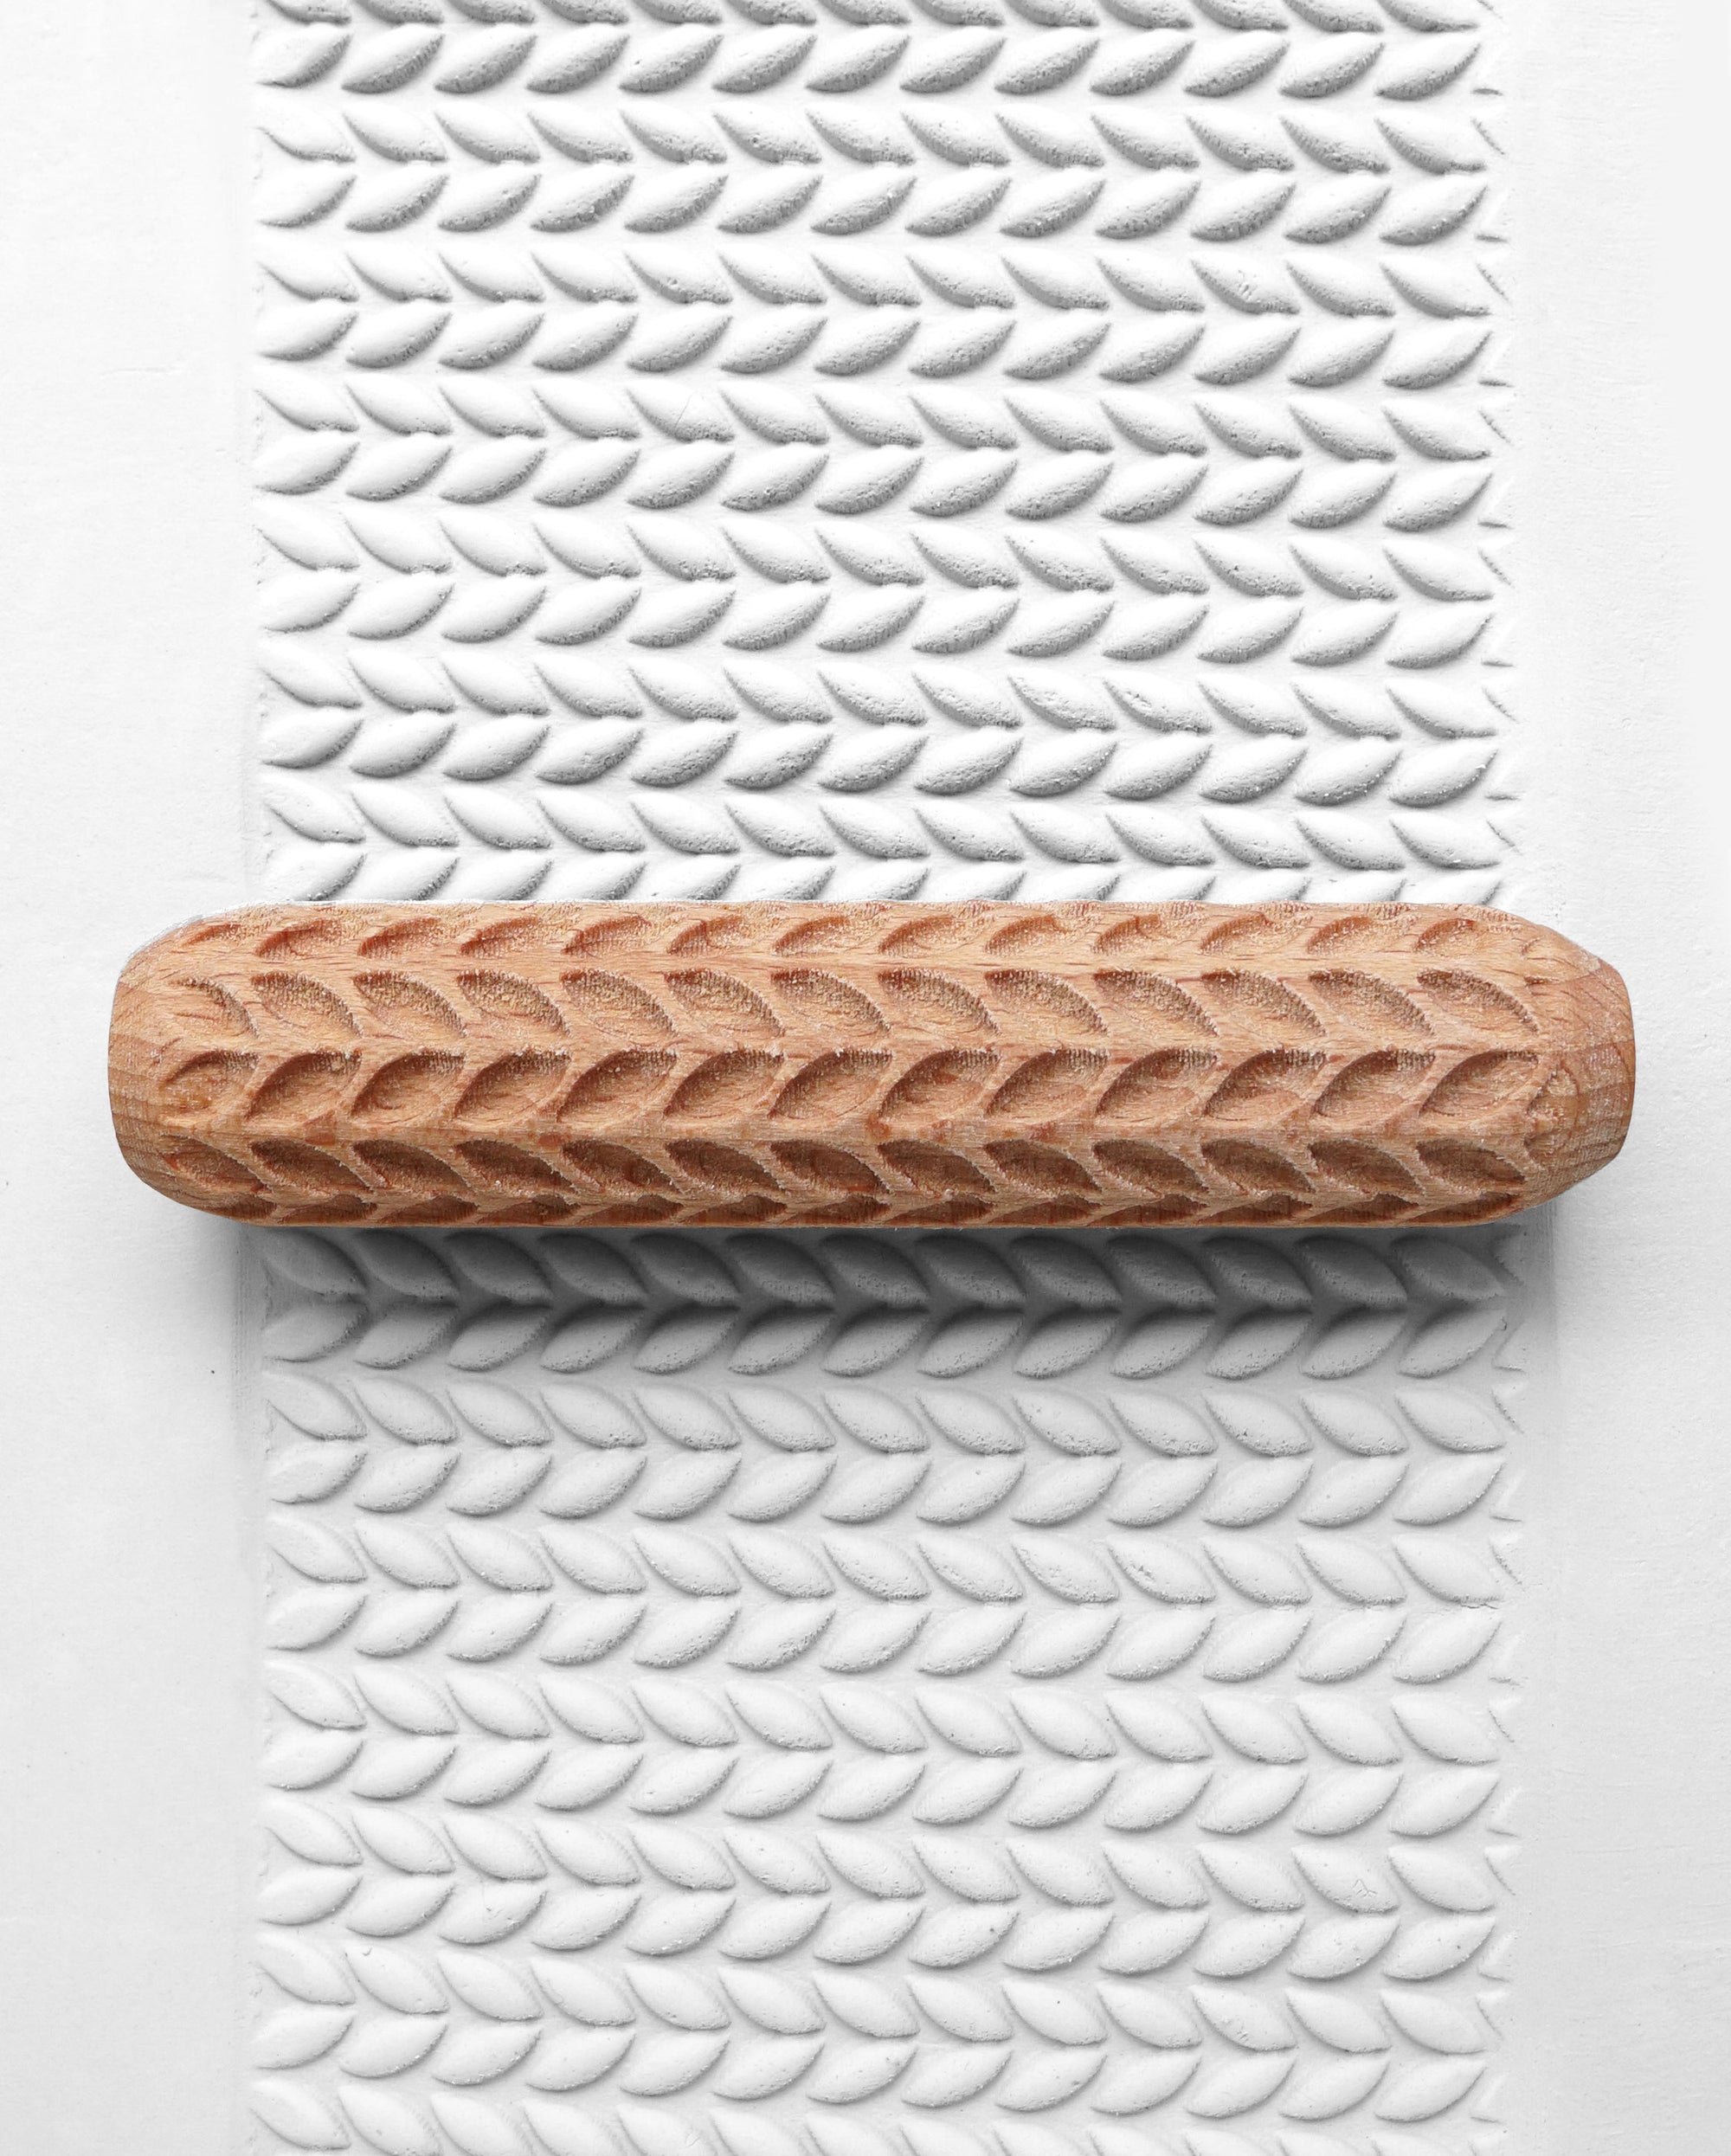 Clay Texture Roller - Knit - Sanbao Studio - ChinaClayArt